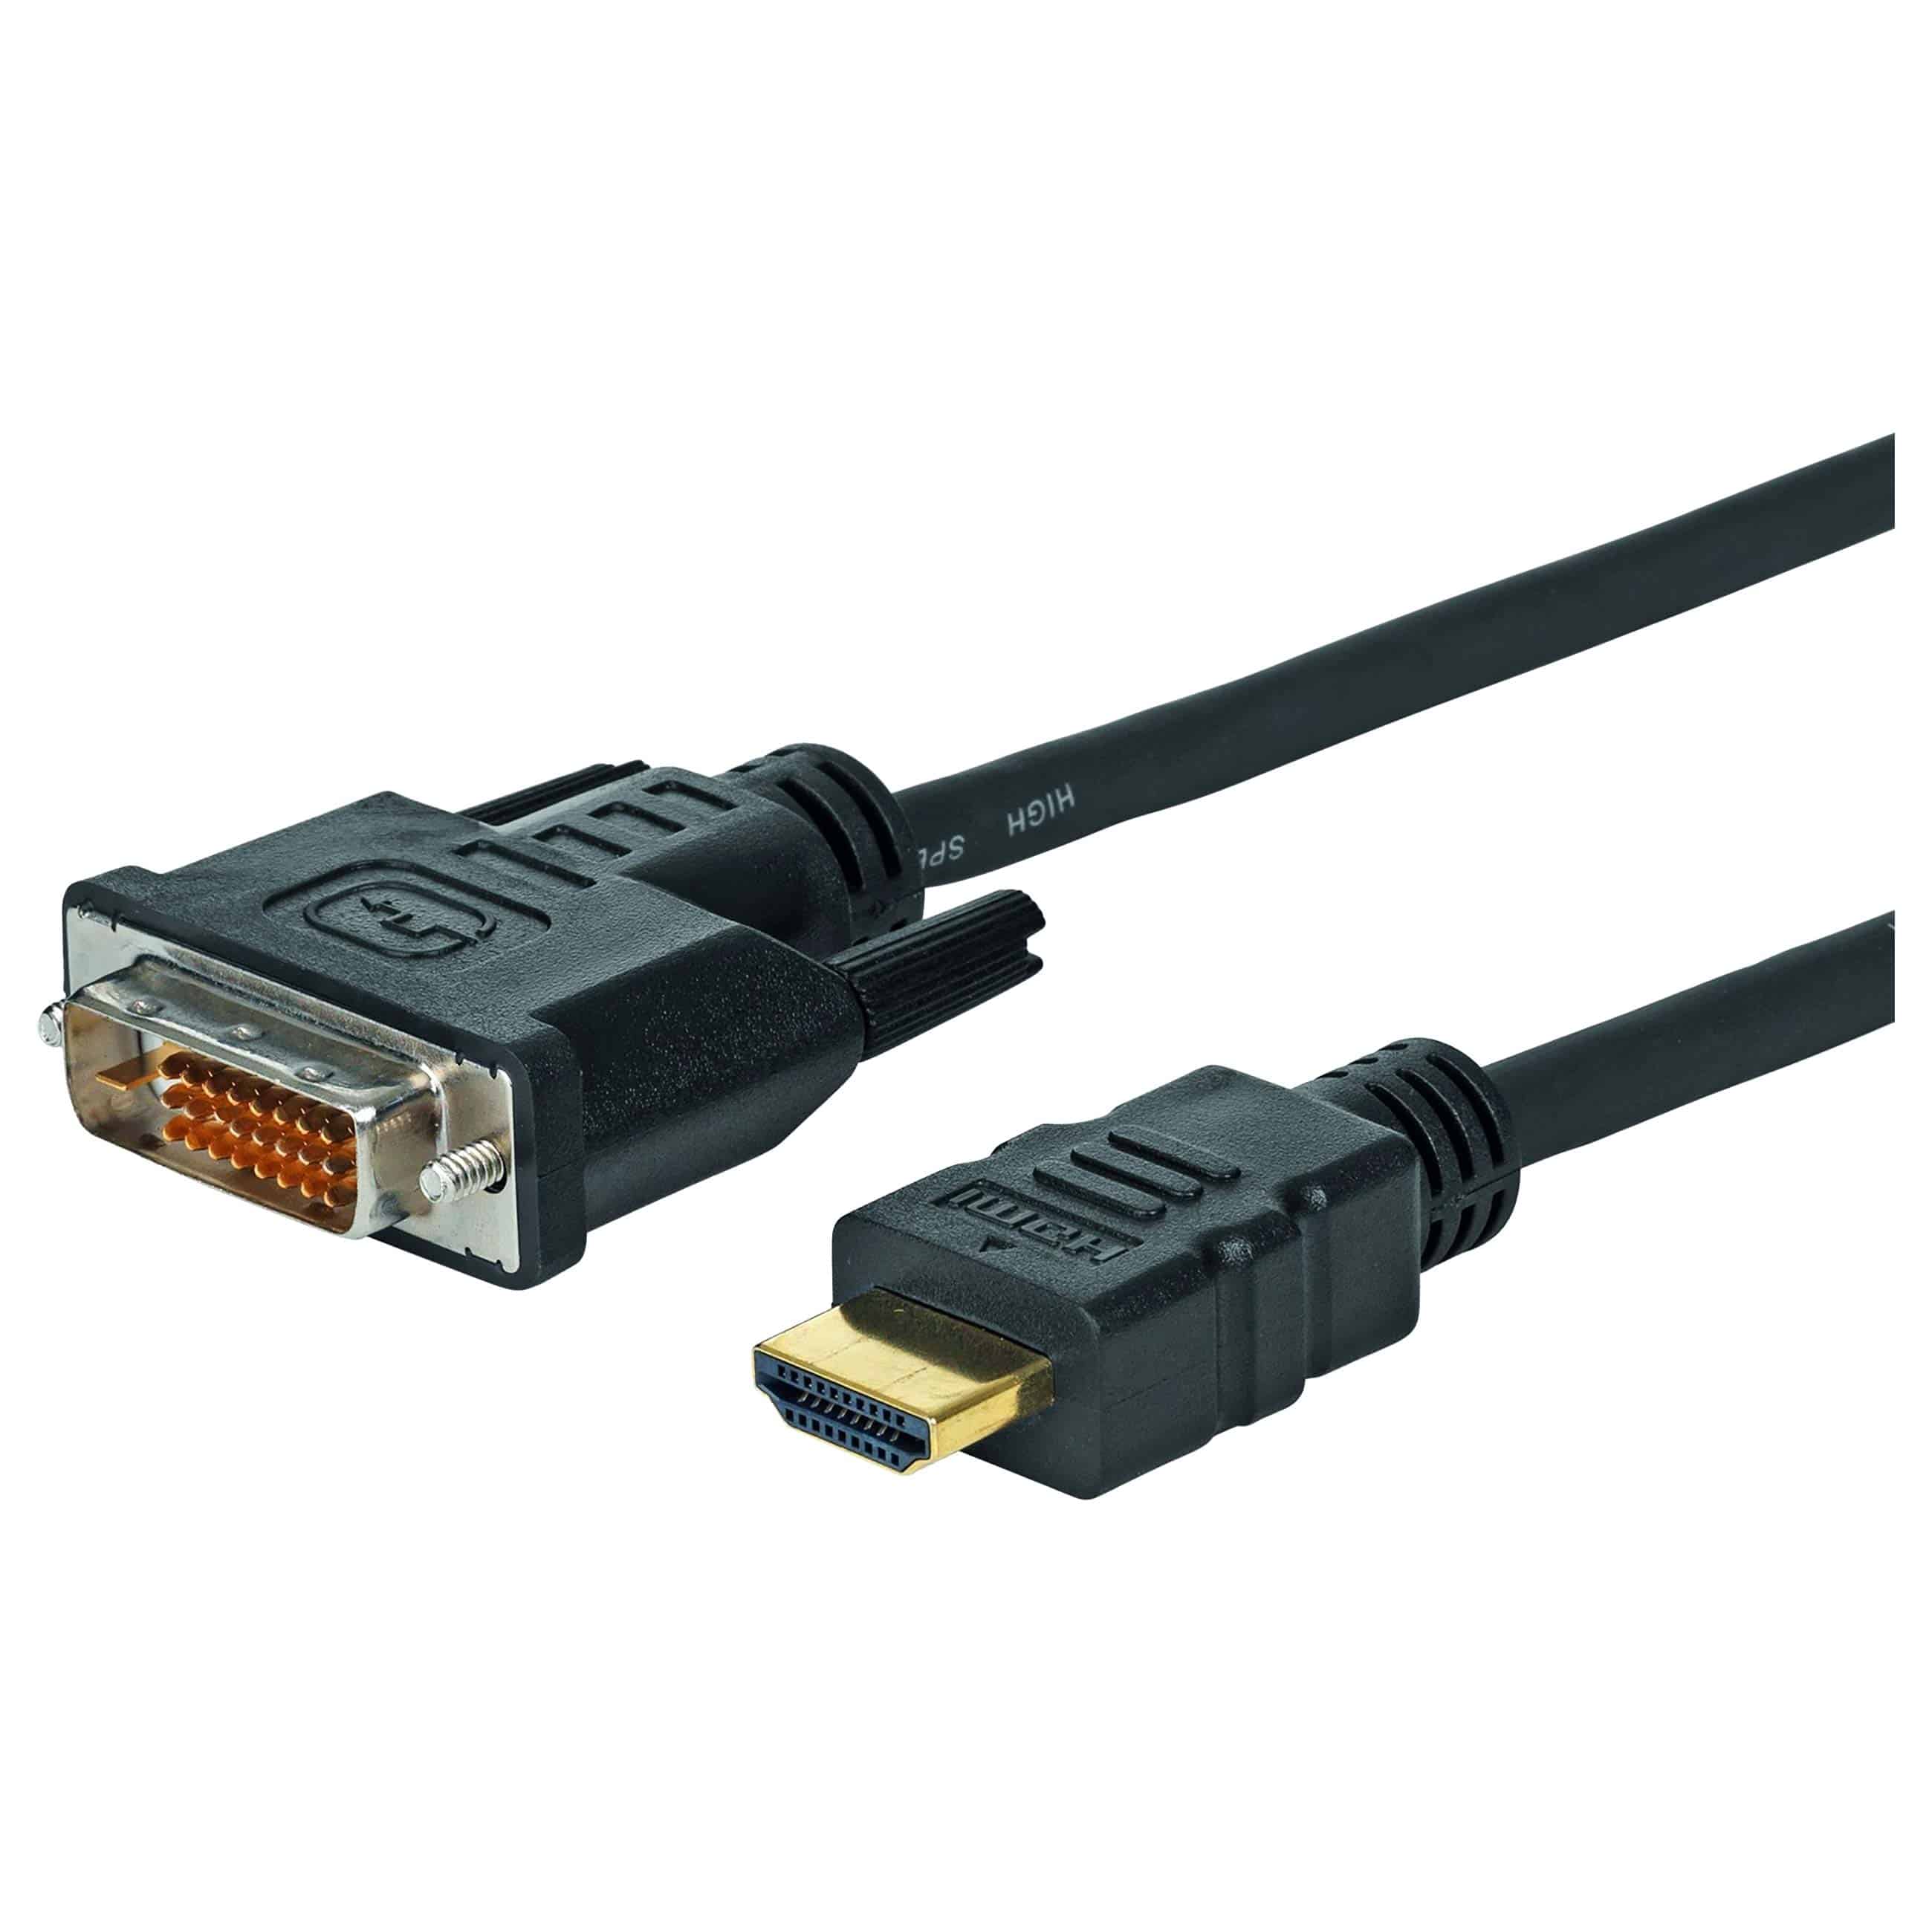 Kabel - HDMI (M) - DVI-D (M) - 2m - schwarz